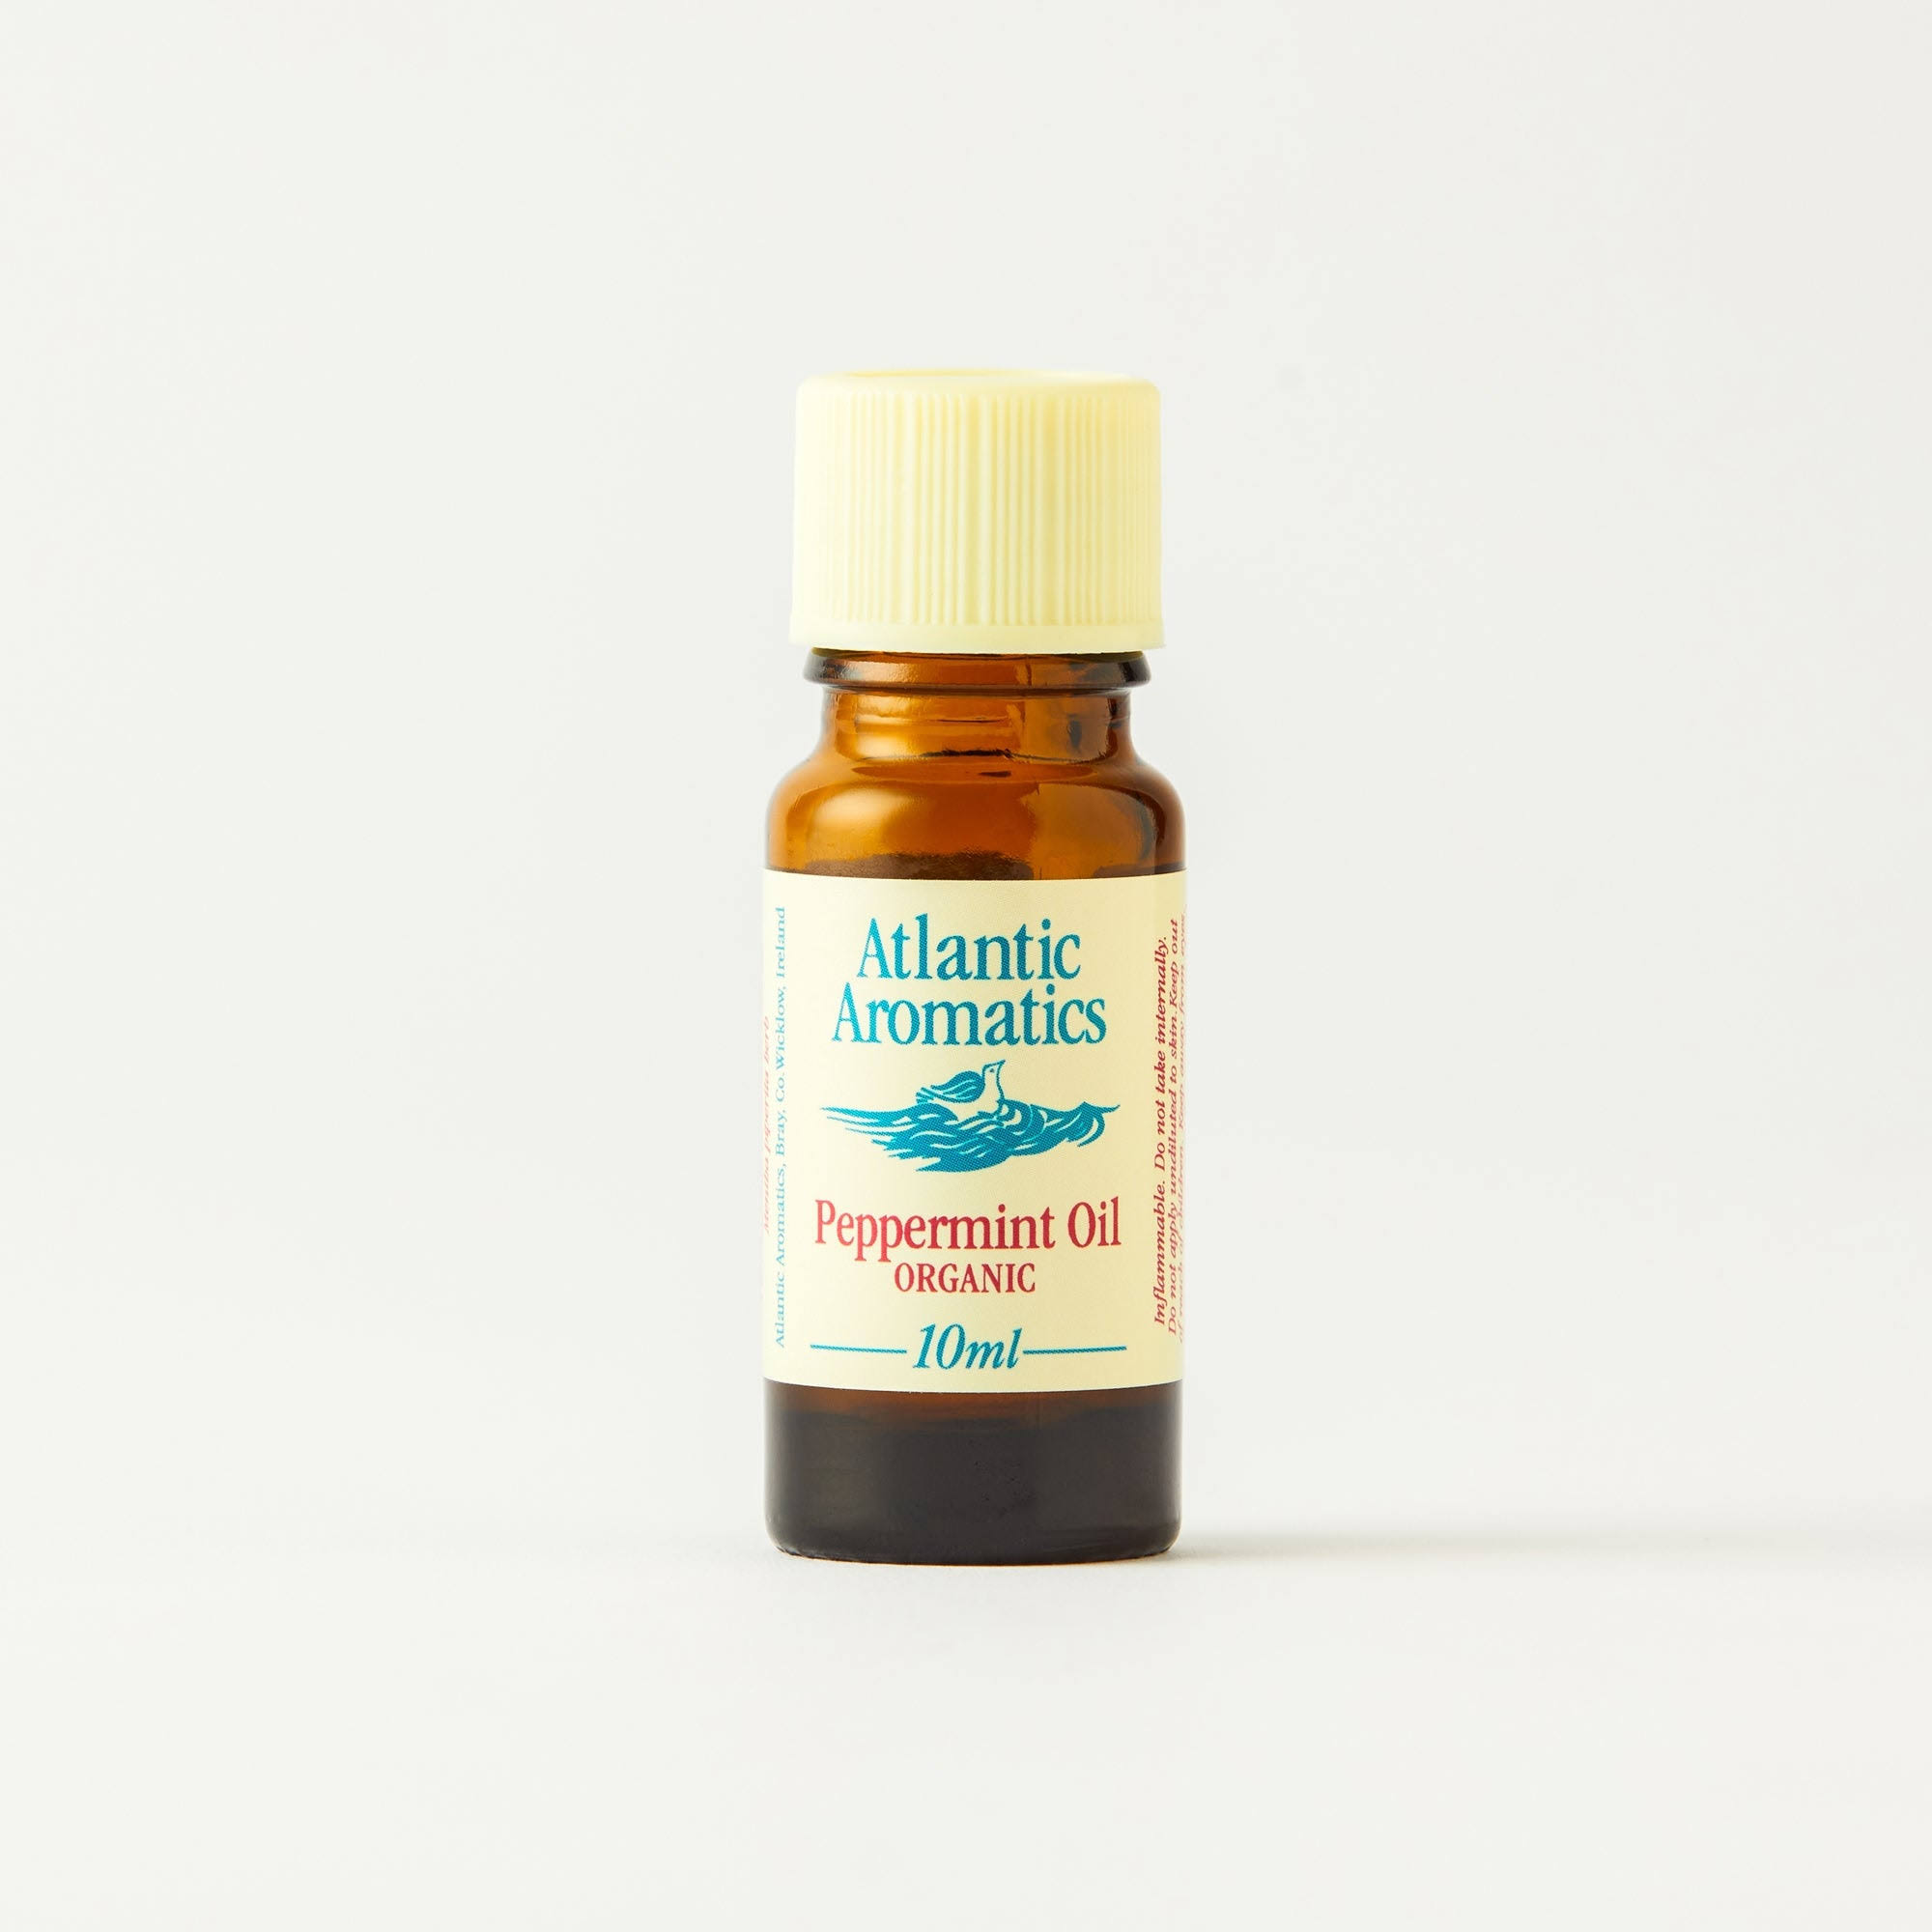 Atlantic Aromatics Organic Peppermint Oil - 10ml